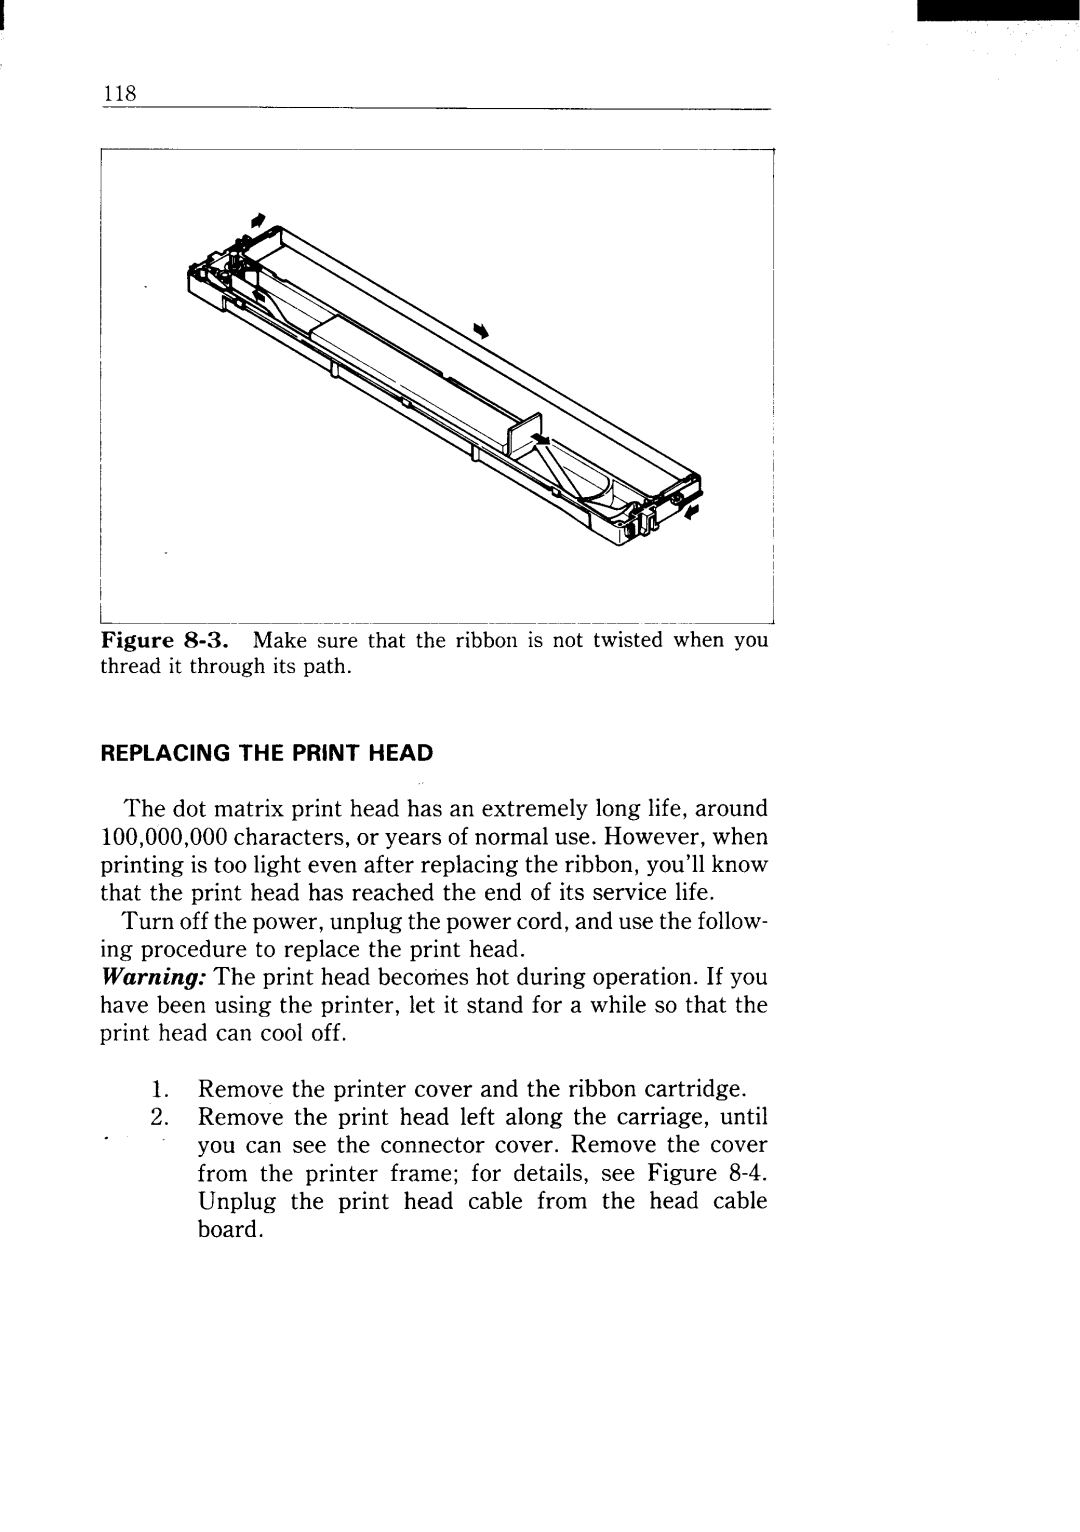 Star Micronics NX-15 user manual 